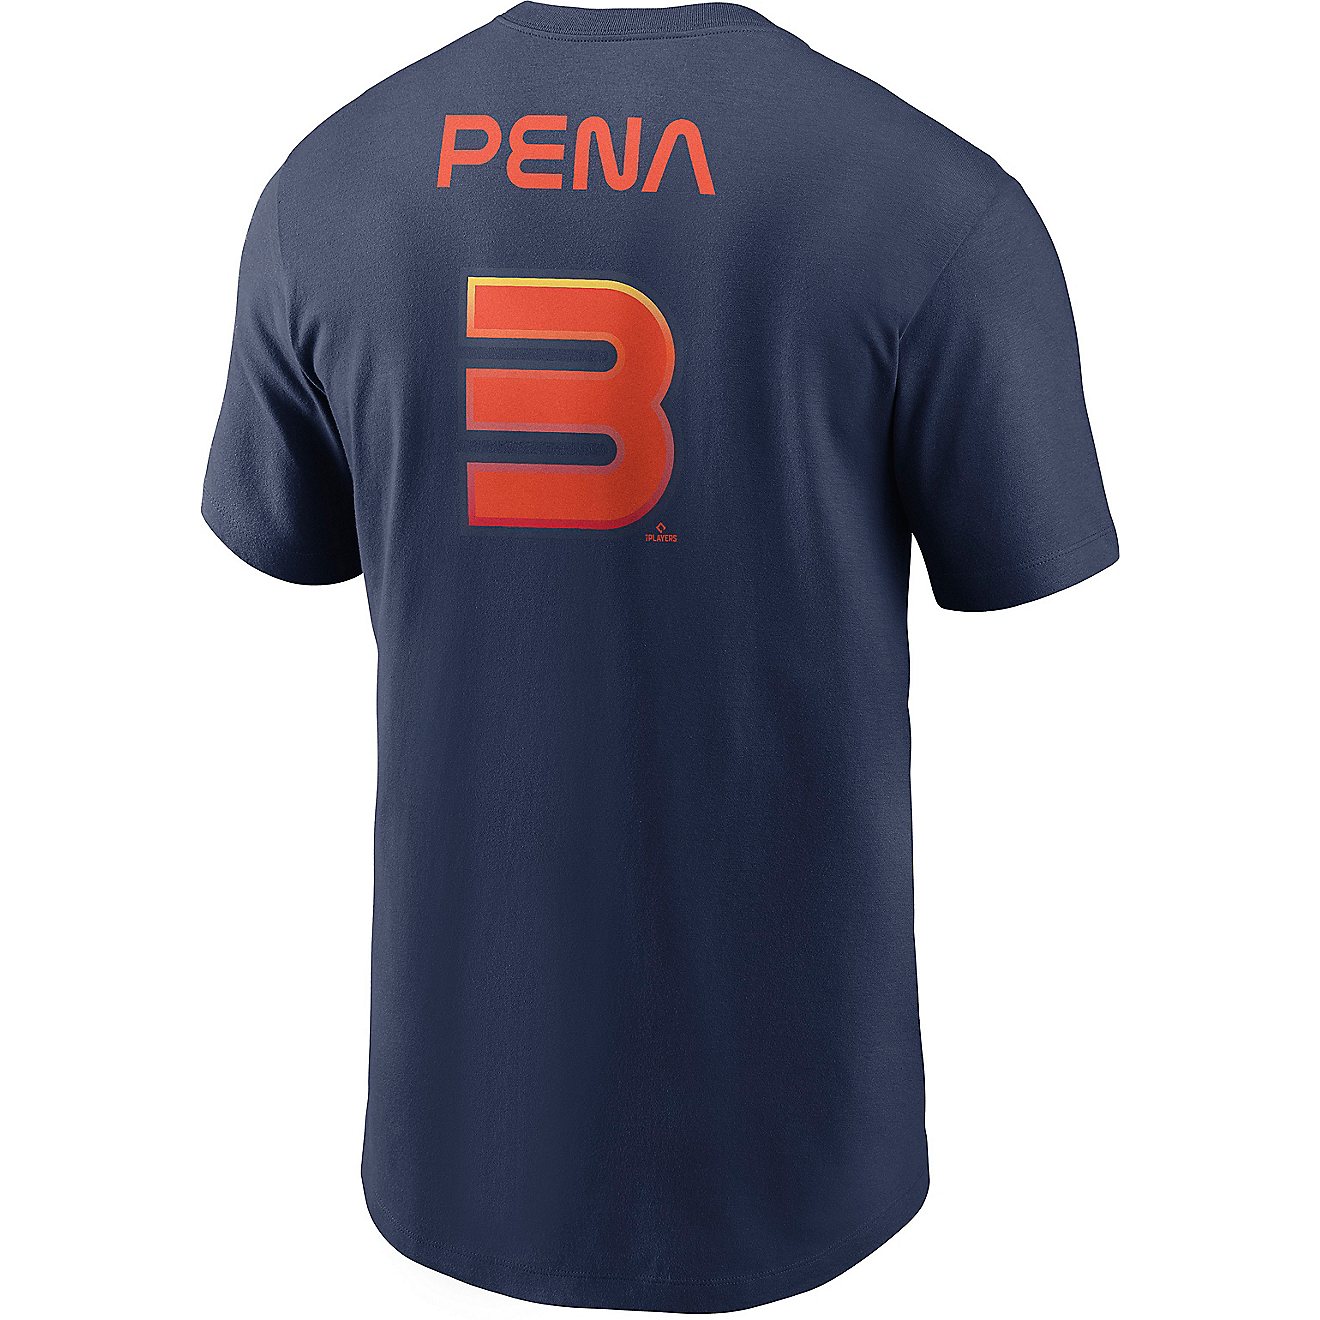 Nike Men's Houston Astros Jeremy Pena #3 City Connect Short Sleeve T-Shirt